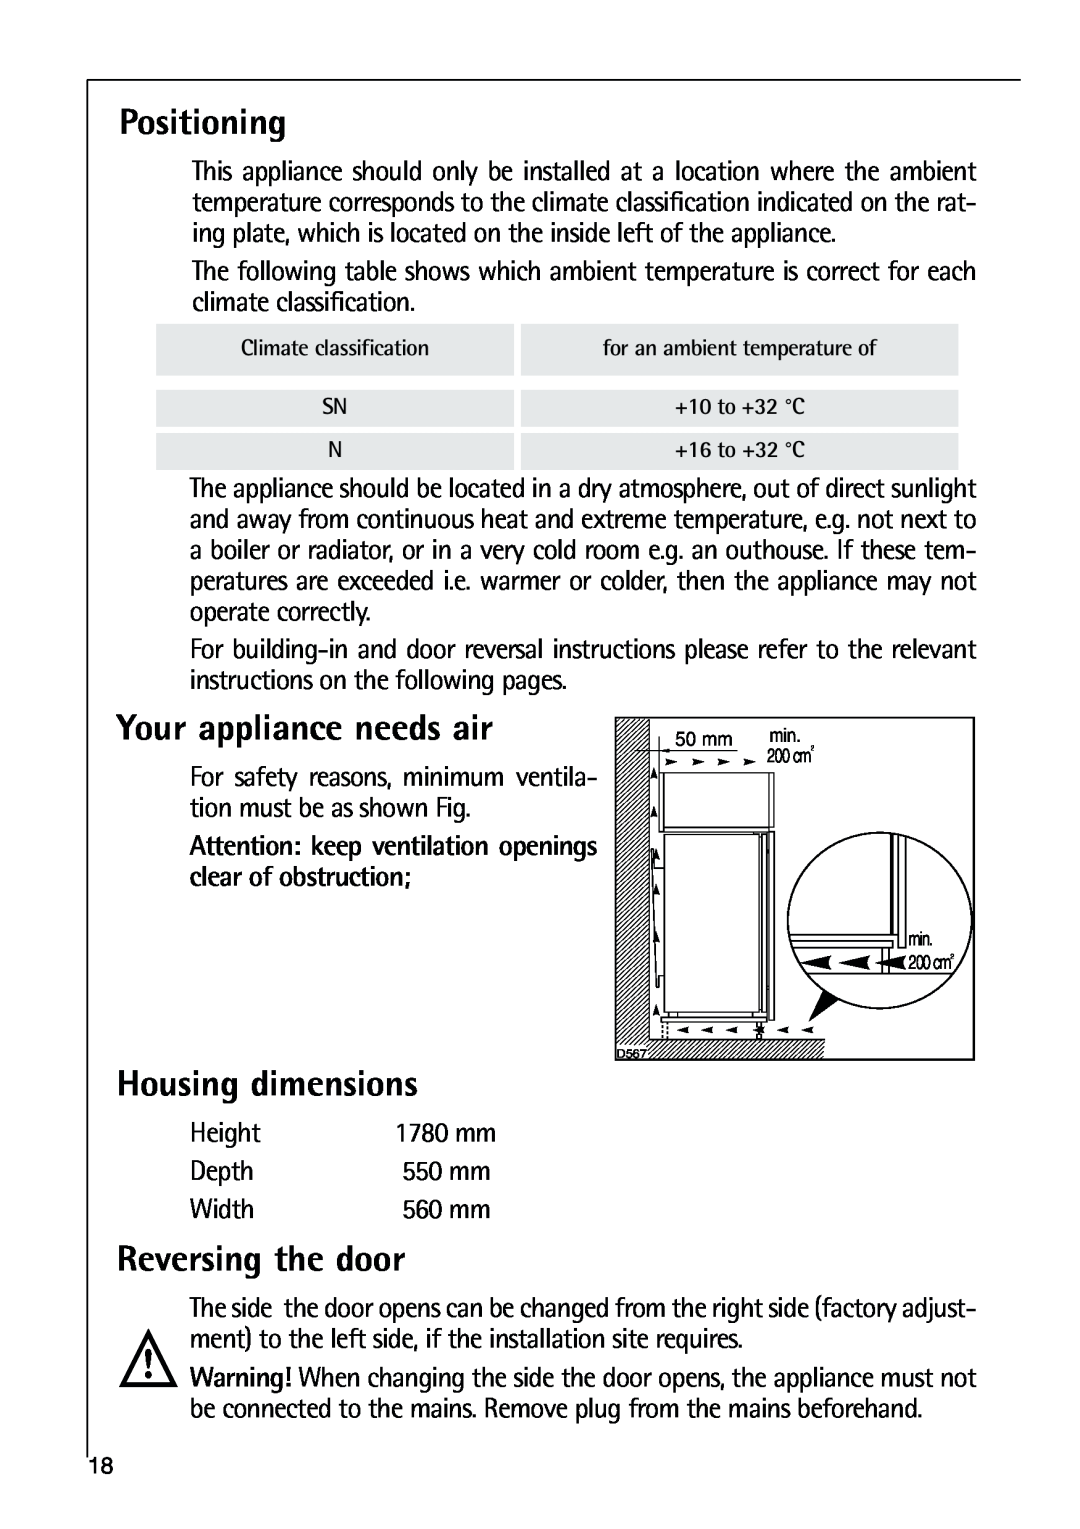 Parkinson Cowan SANTO K 9, SANTO K 18 Positioning, Your appliance needs air, Housing dimensions, Reversing the door 